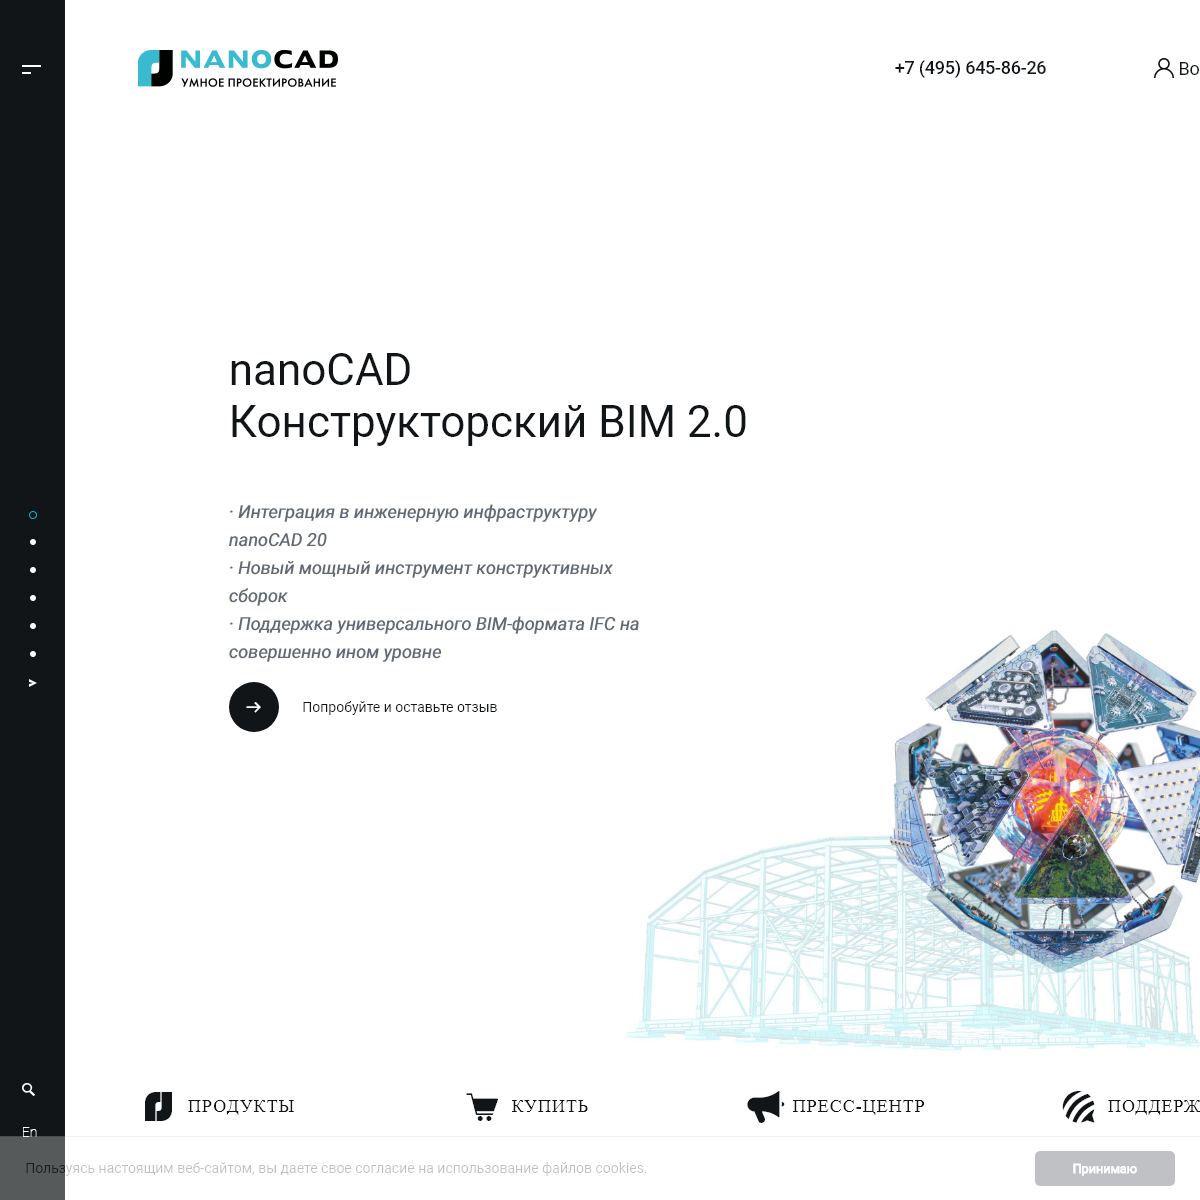 A complete backup of nanocad.ru